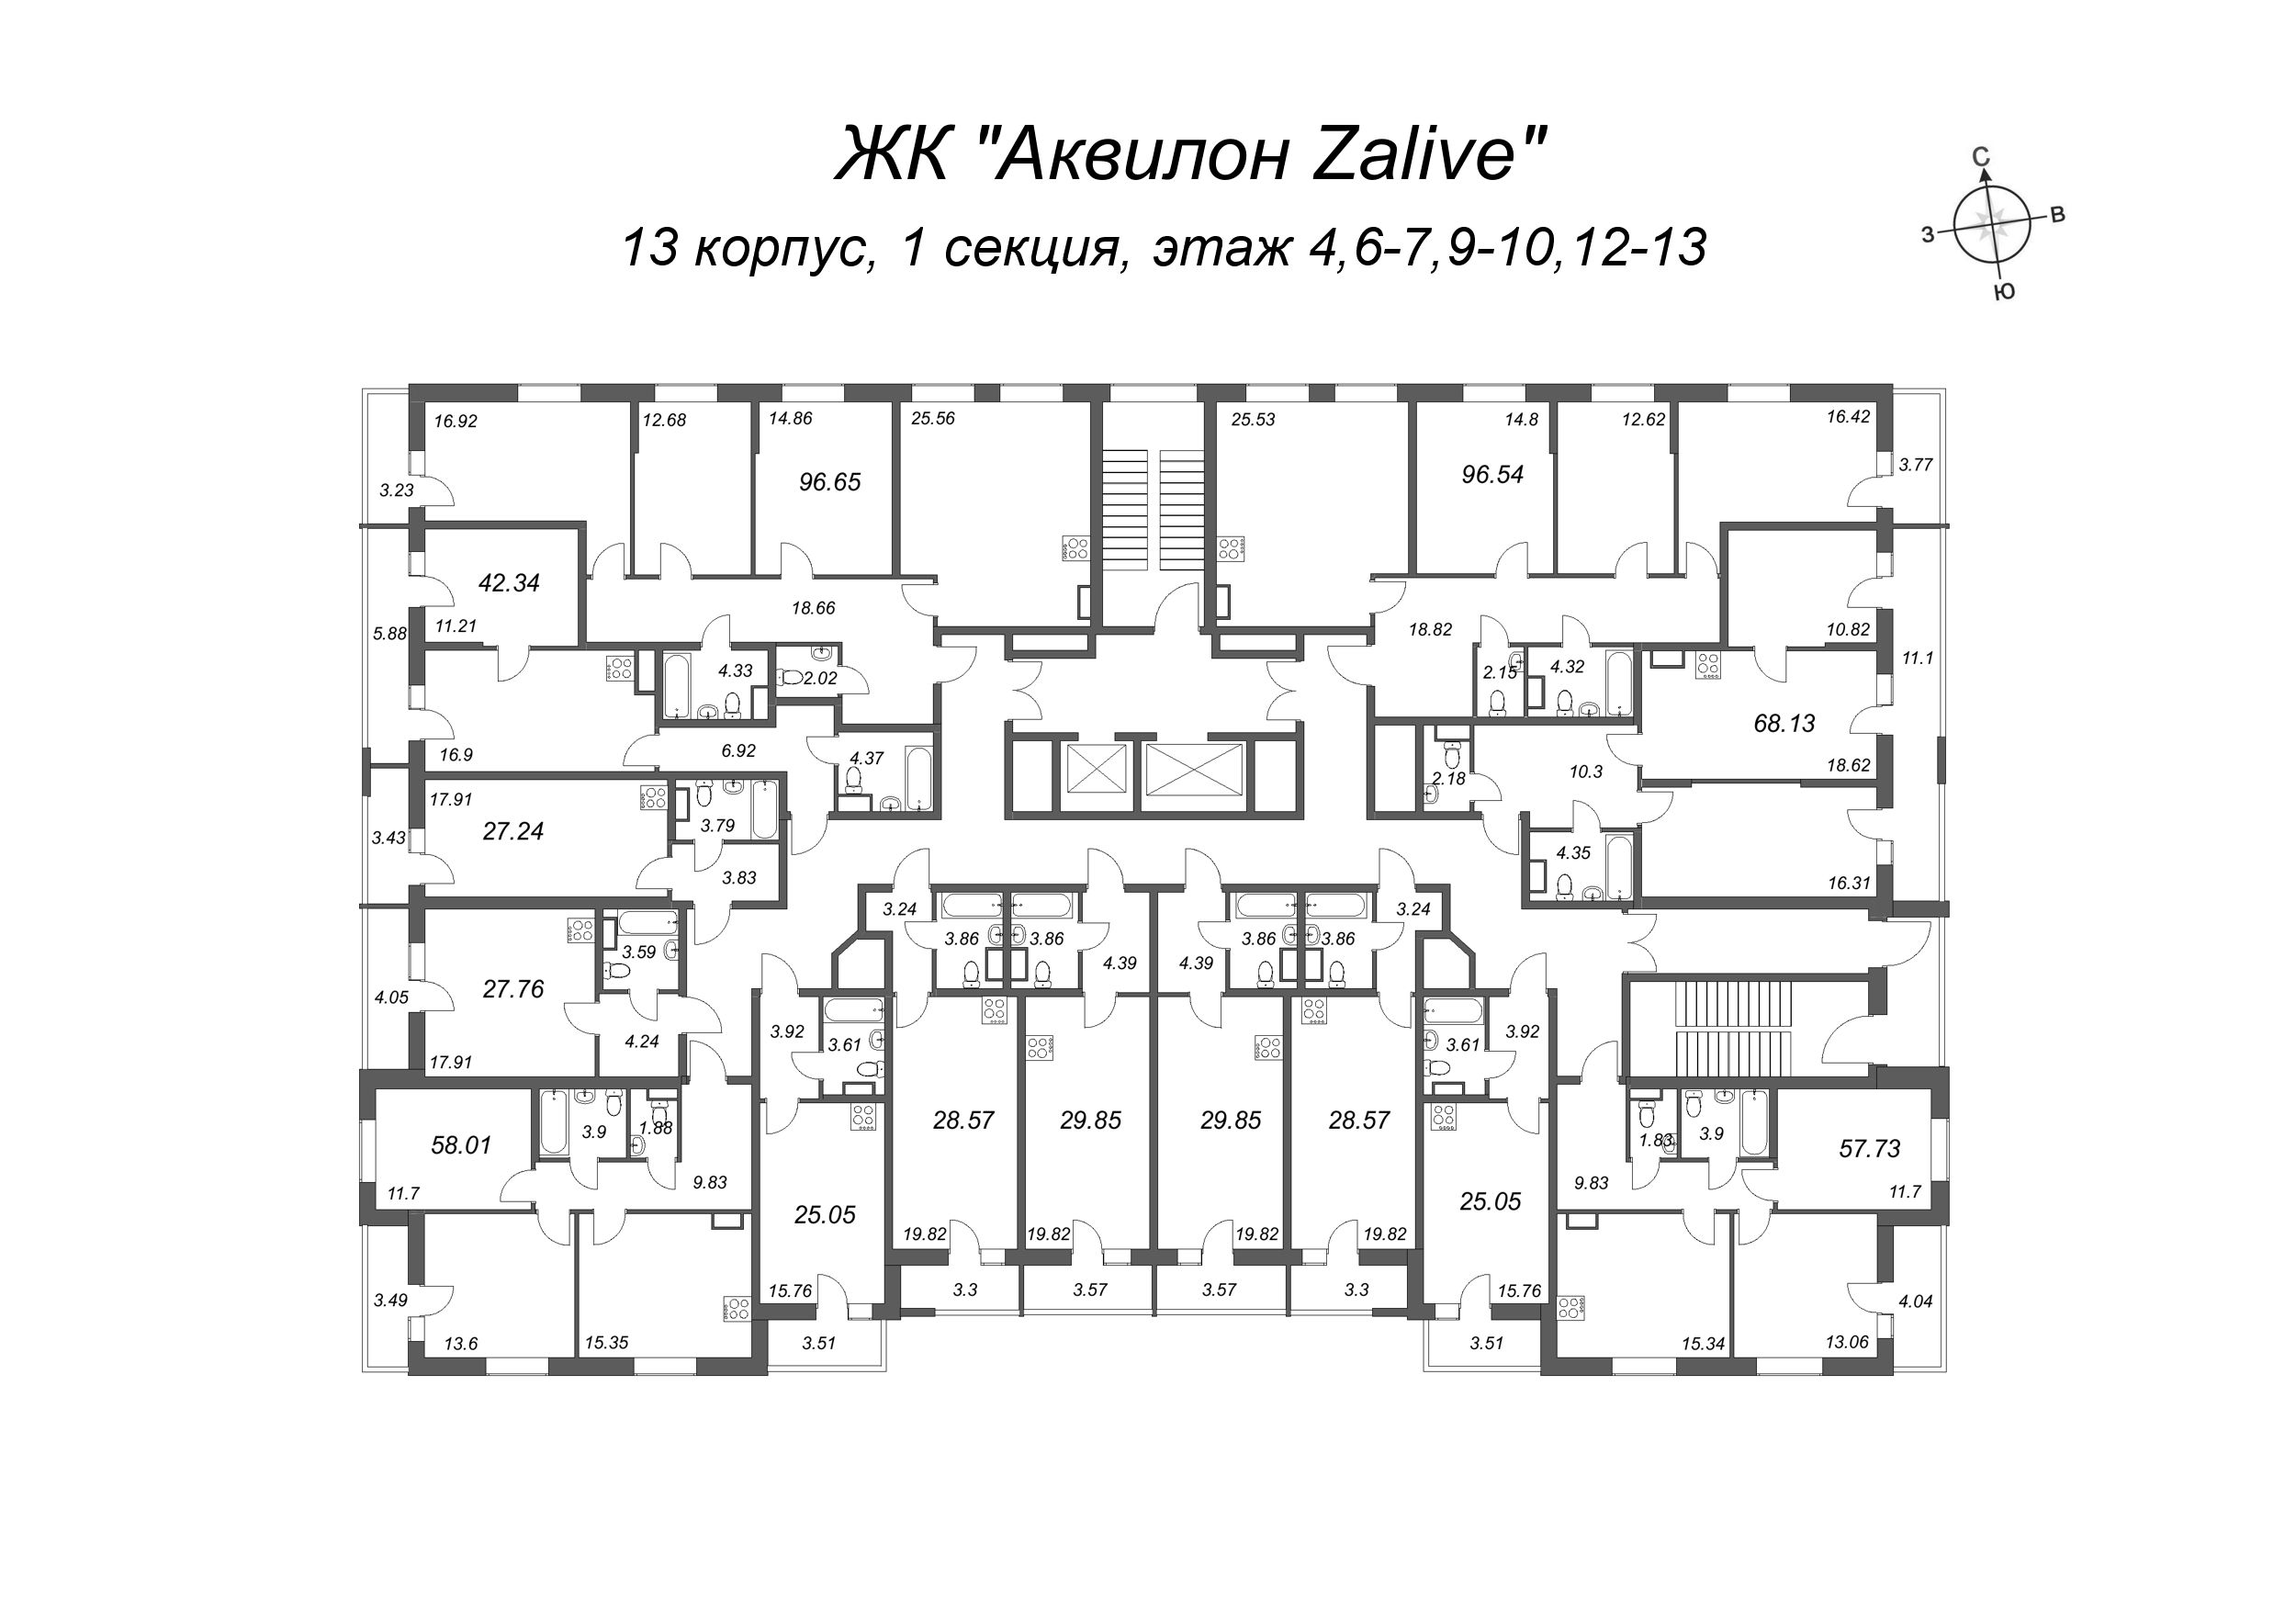 4-комнатная (Евро) квартира, 96.65 м² - планировка этажа